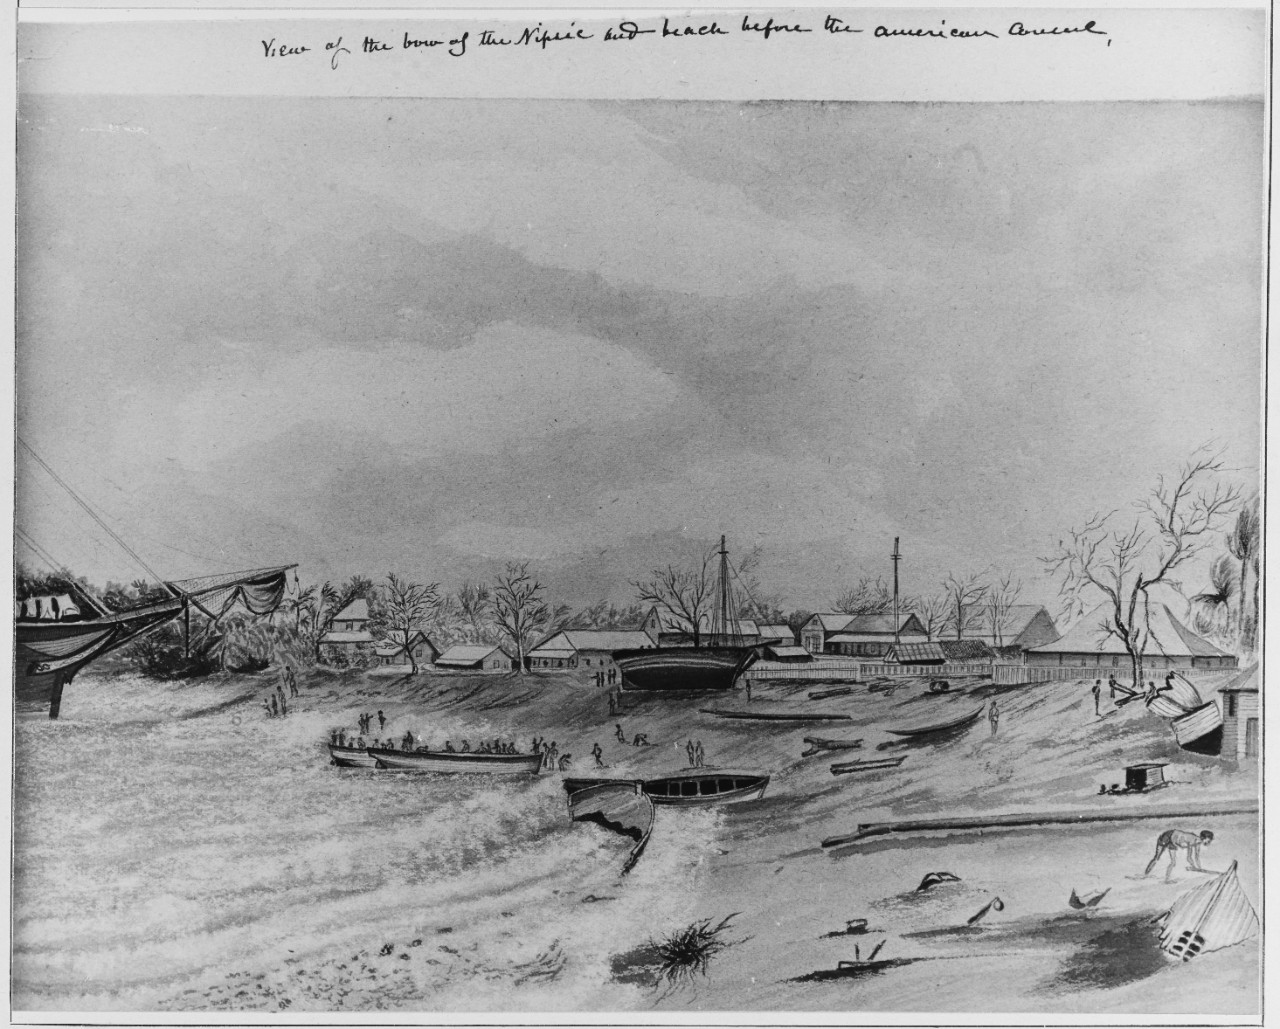 Photo #: NH 42126  Hurricane at Apia, Samoa, 15-16 March 1889